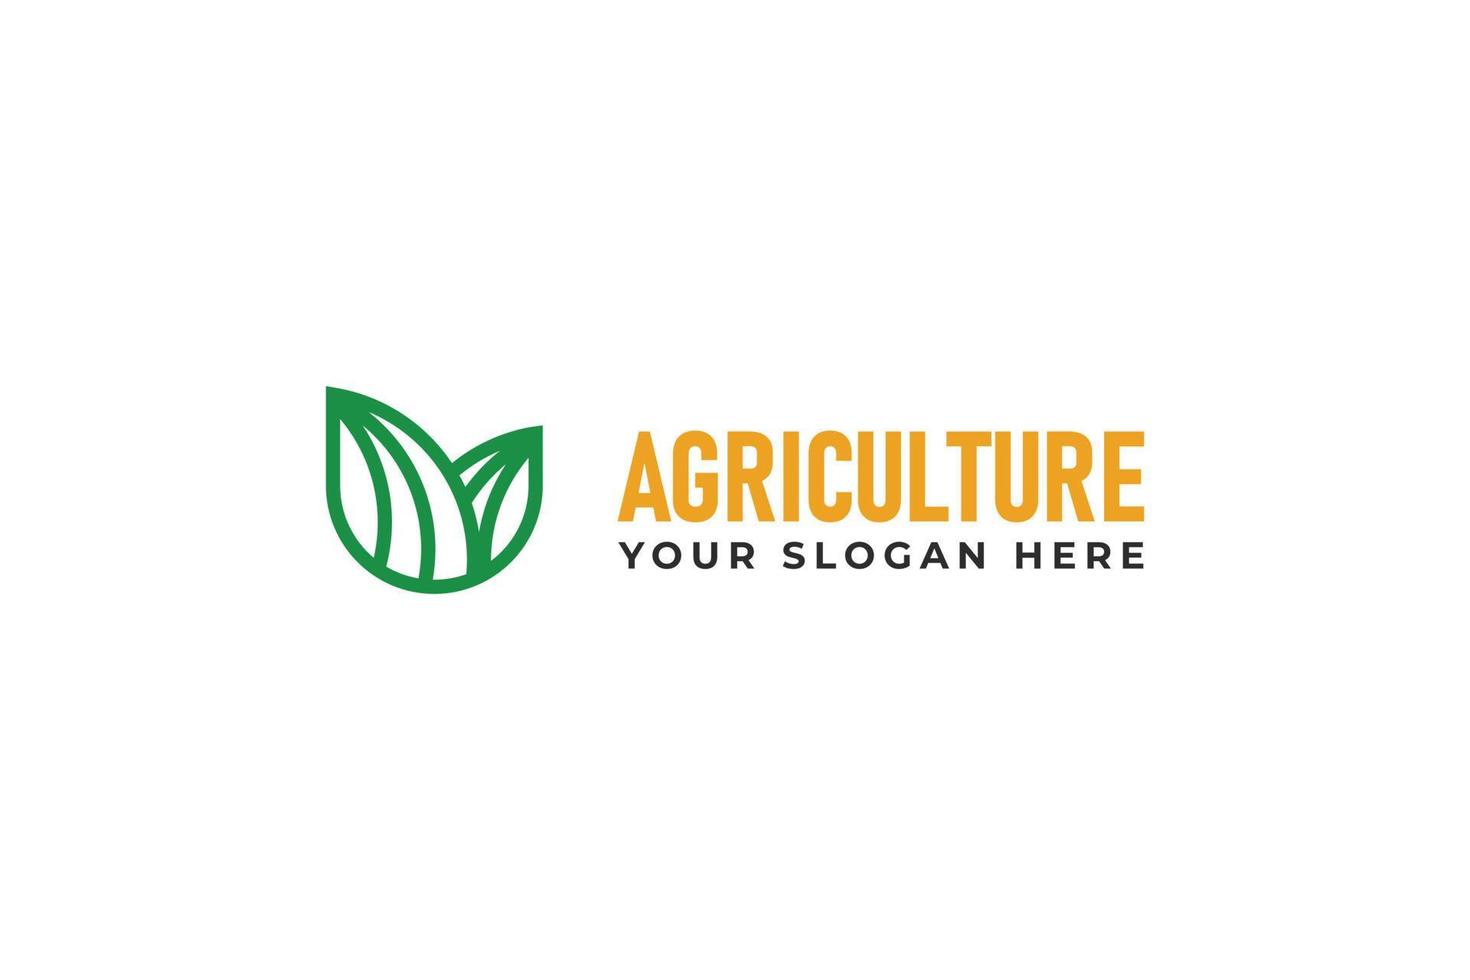 Agriculture logo design vector